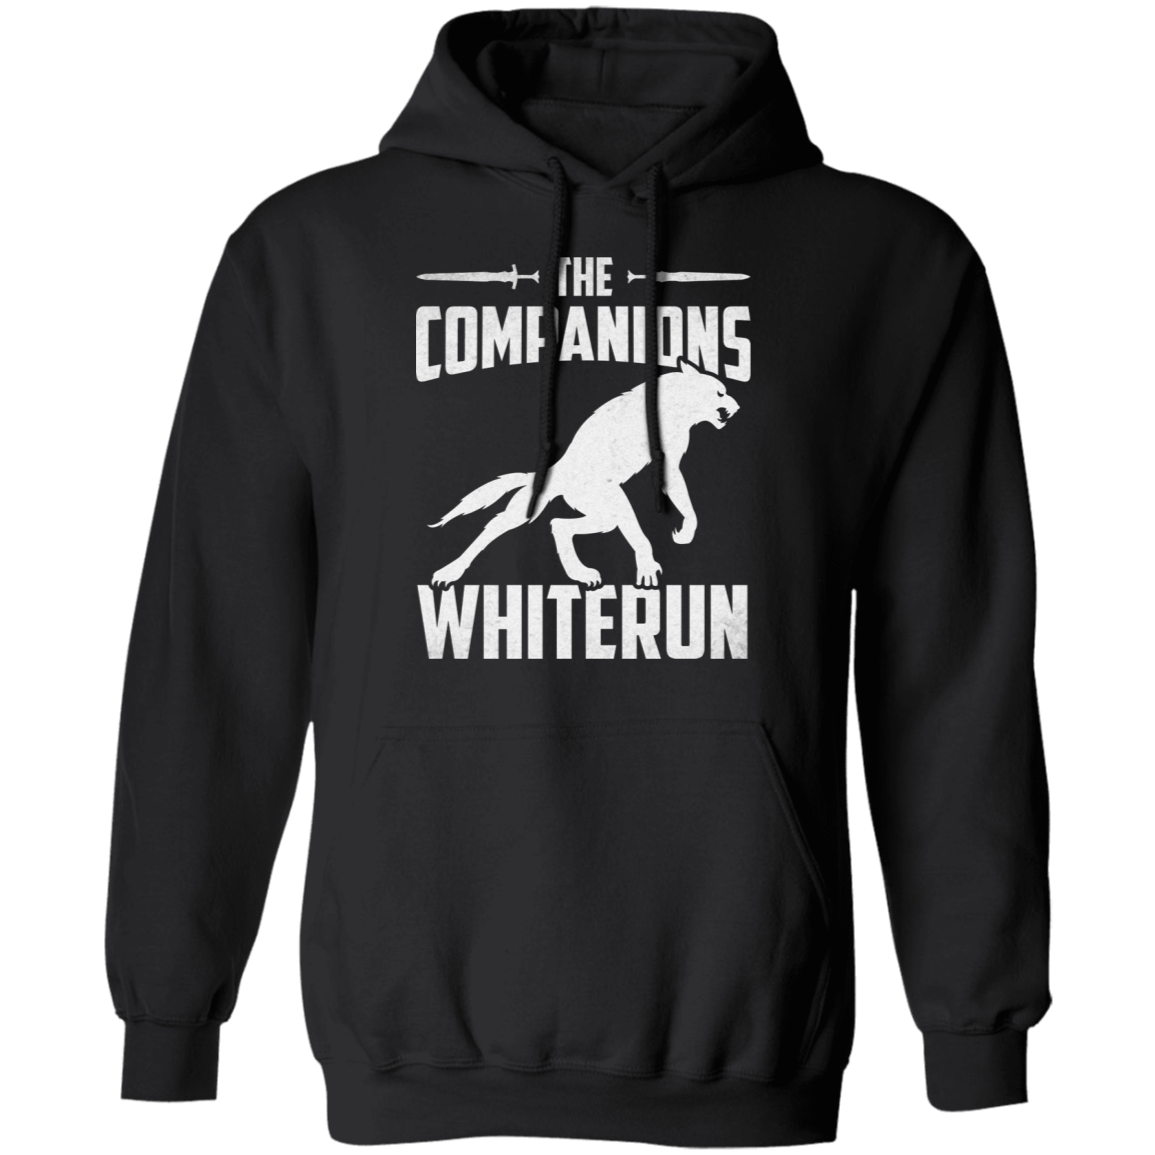 The Companions Whiterun Pullover Hoodie 8 oz